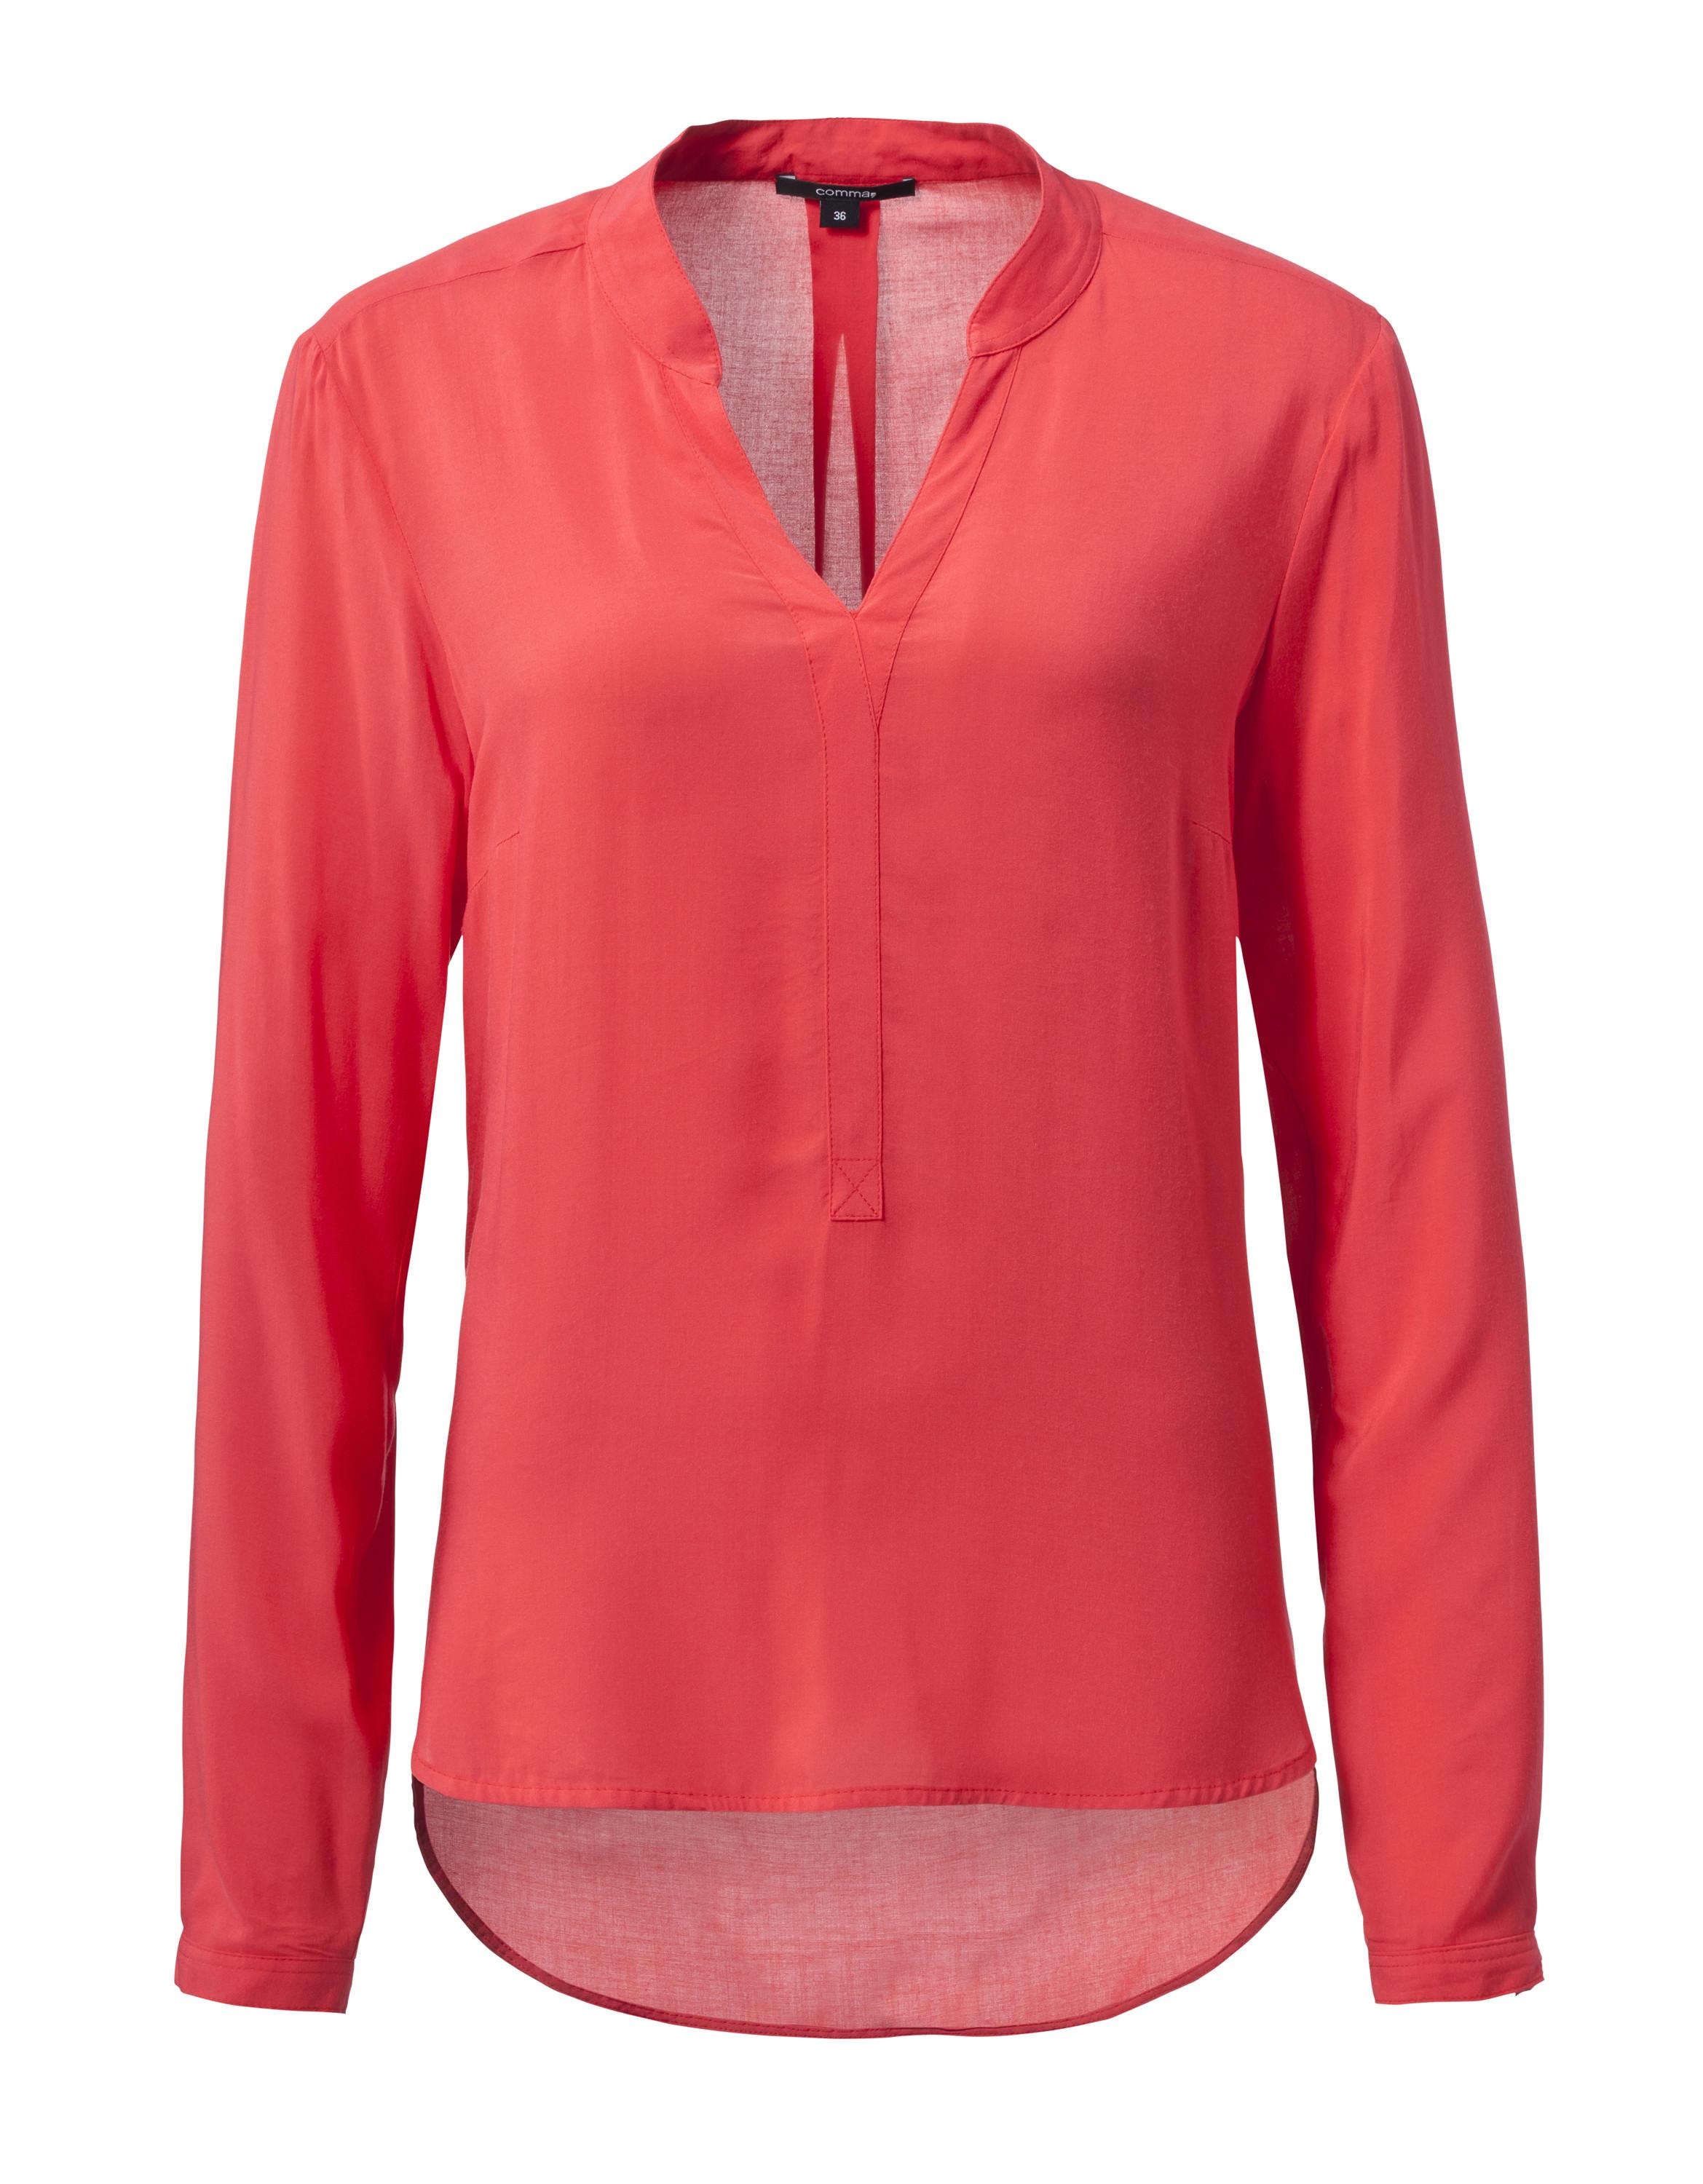 Frisrode blouse - Comma - € 59,99